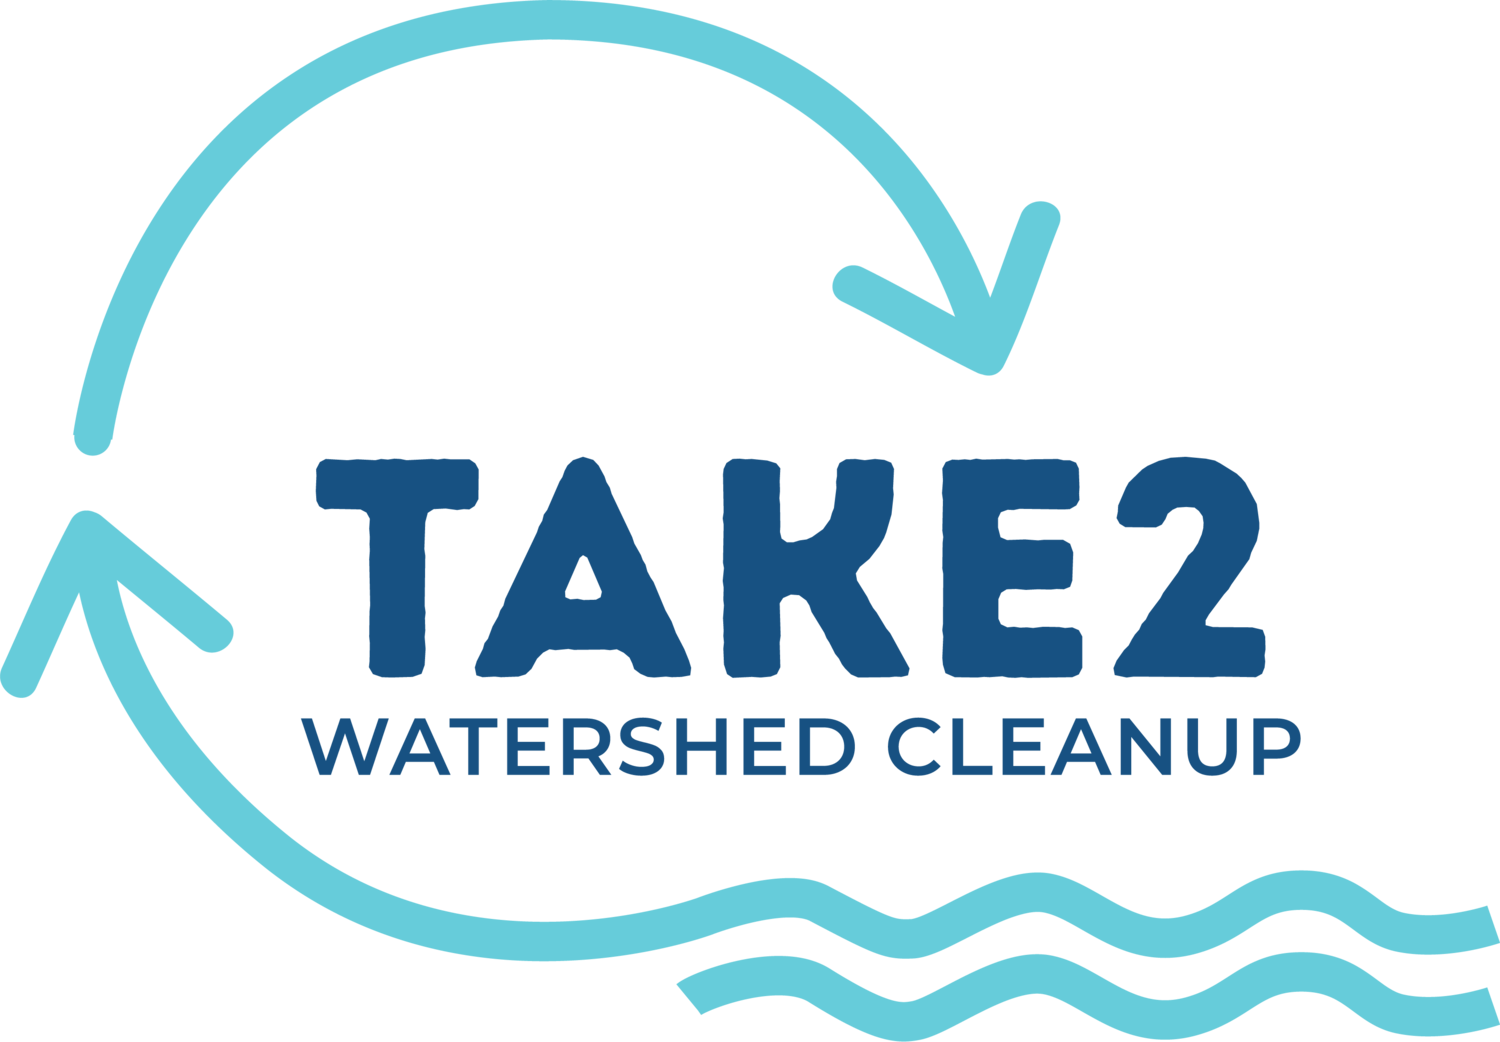 Take2 Watershed Cleanup